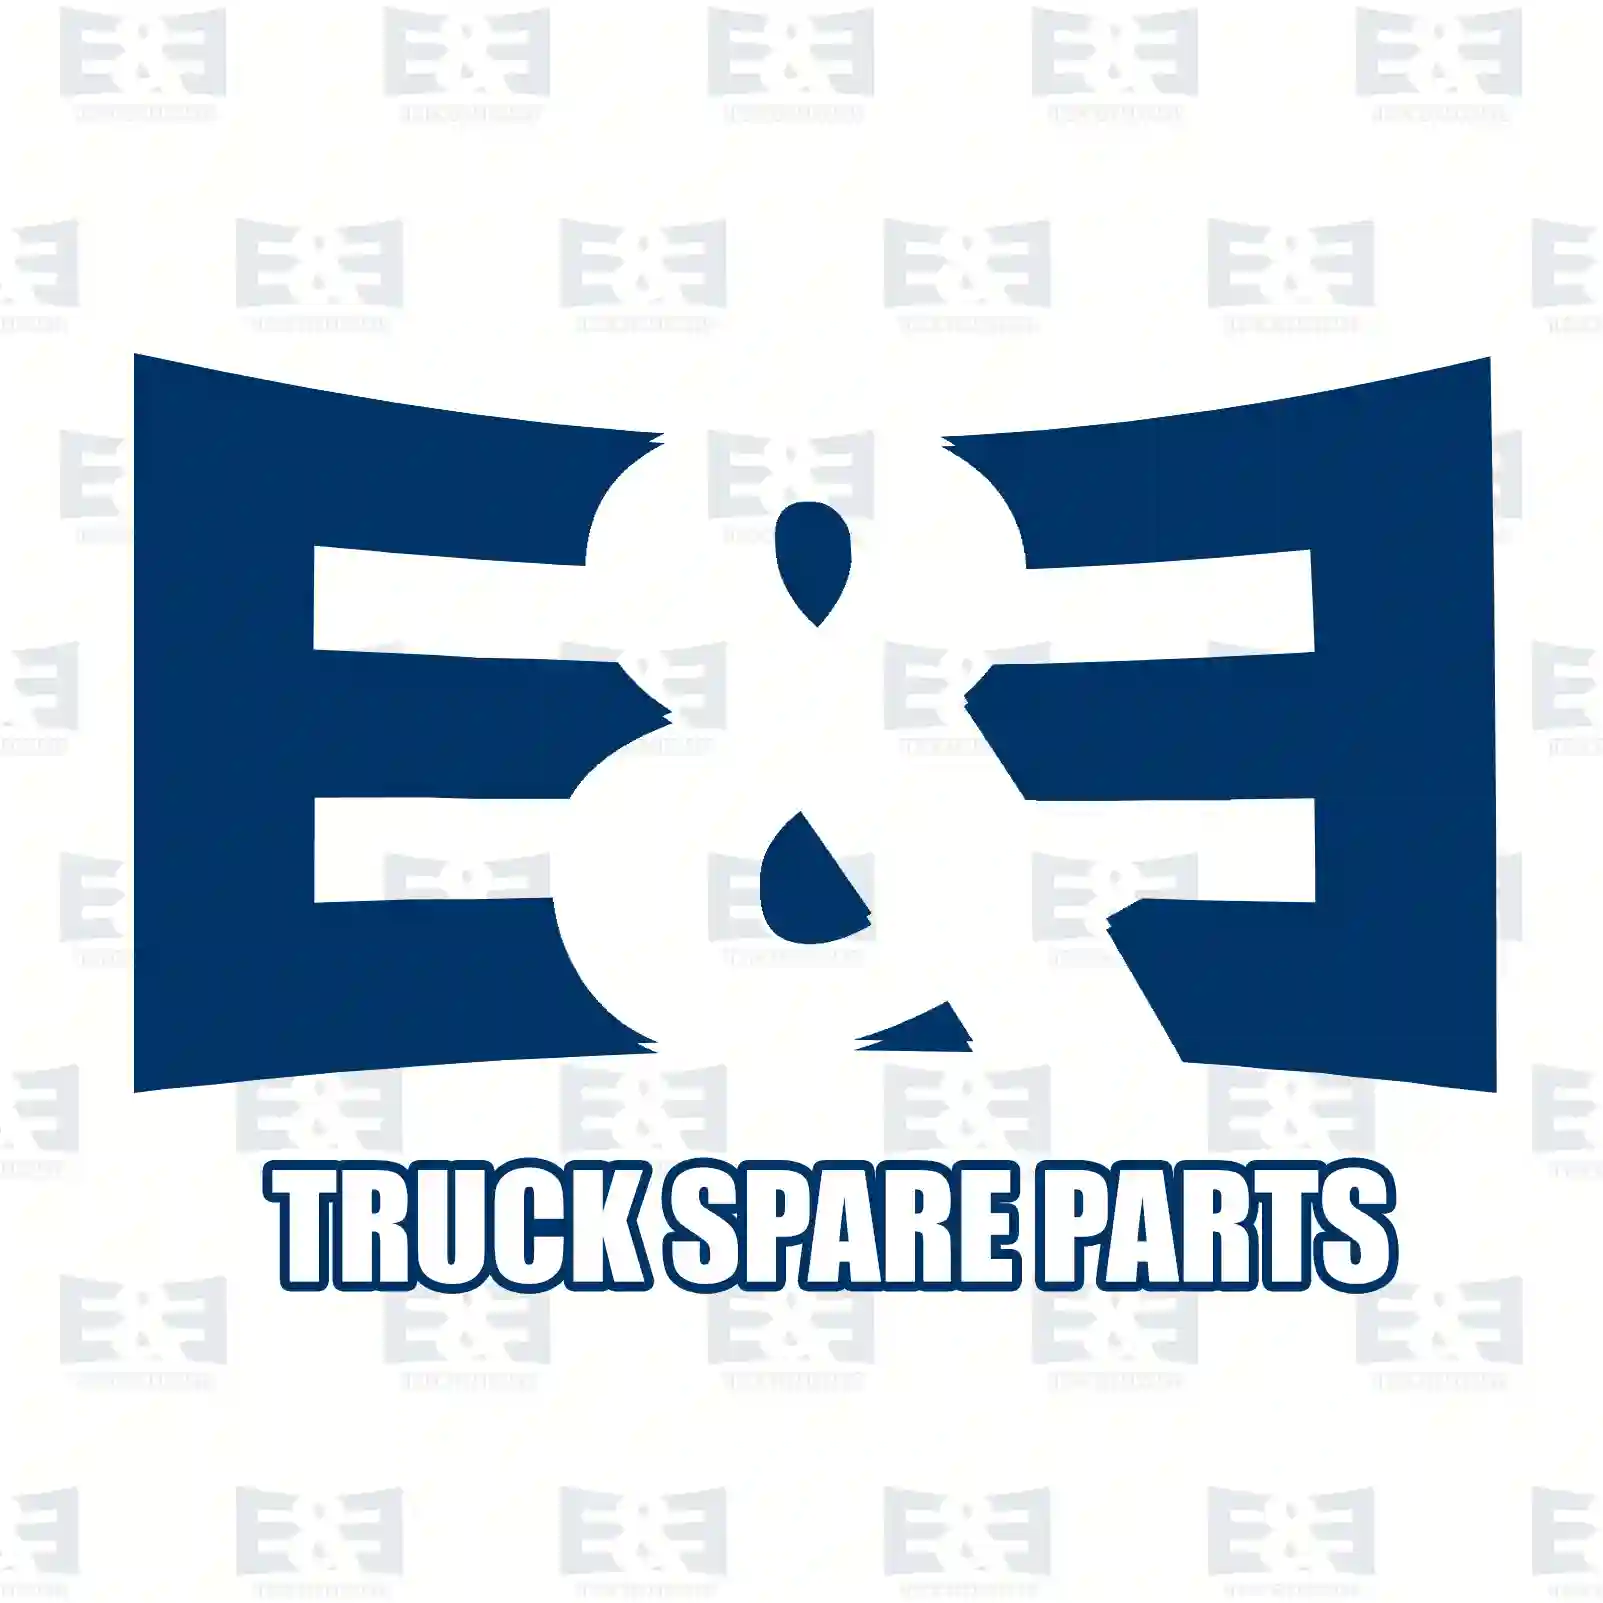 Ball joint, right hand thread, 2E2278072, 0003010200, 0003010222, , ||  2E2278072 E&E Truck Spare Parts | Truck Spare Parts, Auotomotive Spare Parts Ball joint, right hand thread, 2E2278072, 0003010200, 0003010222, , ||  2E2278072 E&E Truck Spare Parts | Truck Spare Parts, Auotomotive Spare Parts